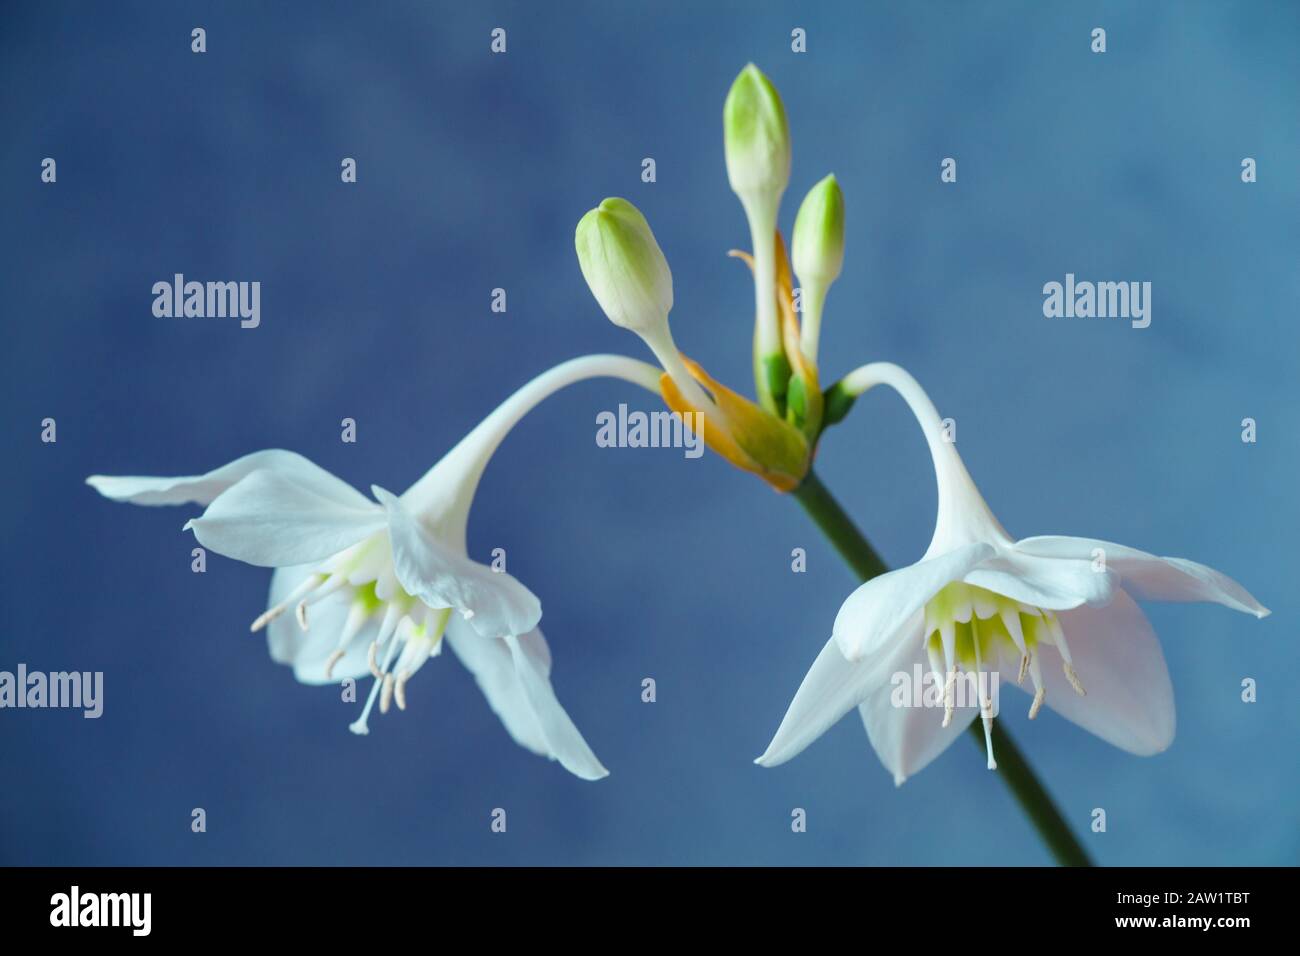 Beautiful Eucharis, the English name Amazon lily, flower close up against blue background. Stock Photo